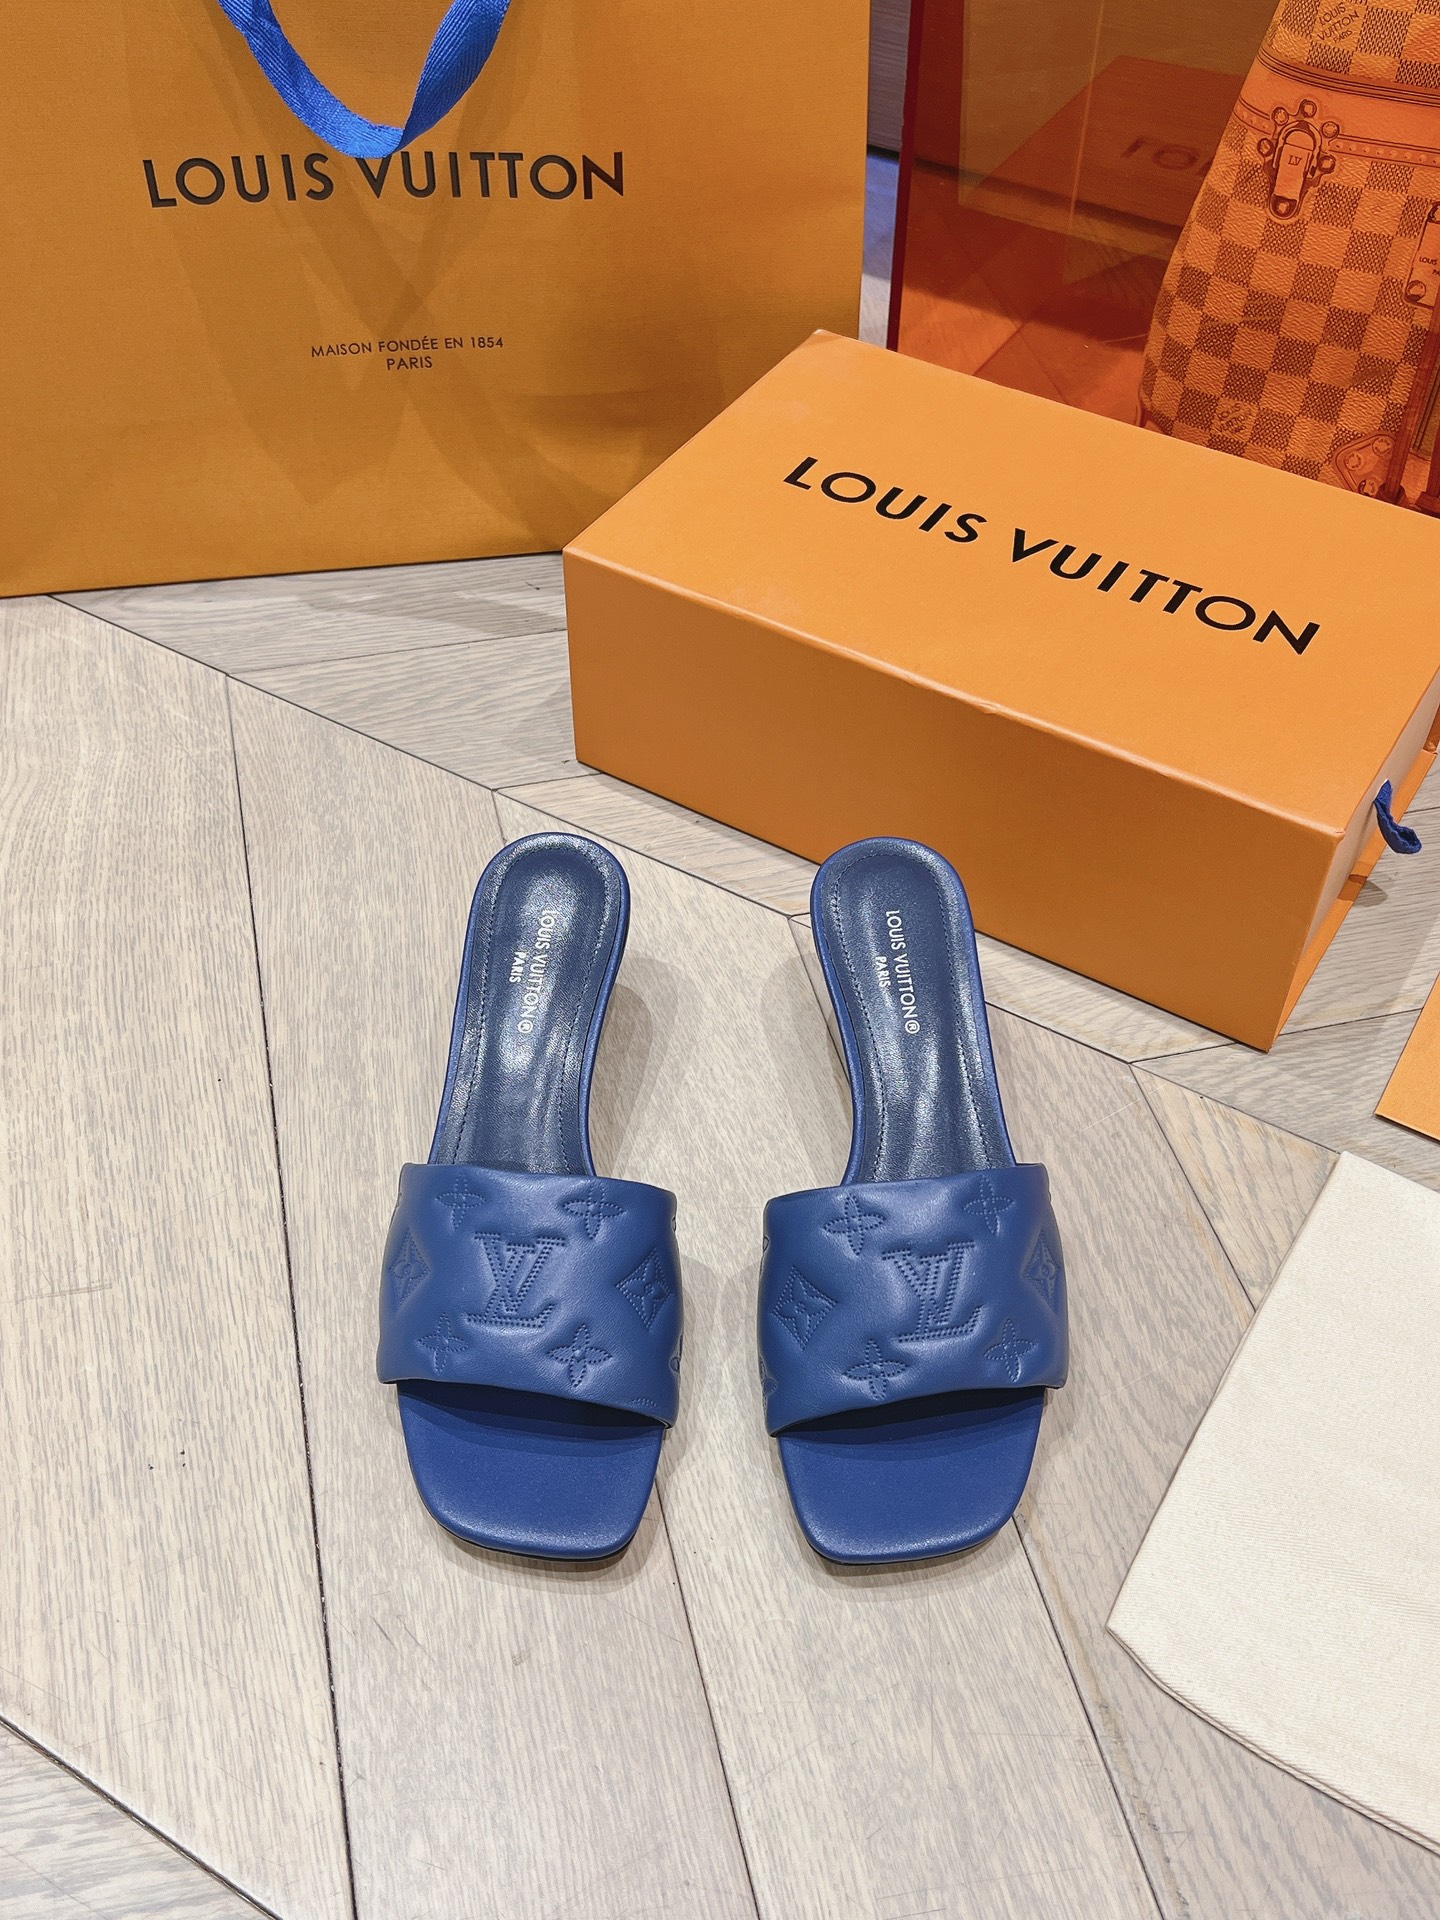 Louis Vuitton Shoes Slippers 7 Star Quality Designer Replica
 Genuine Leather Goat Skin Lambskin Sheepskin